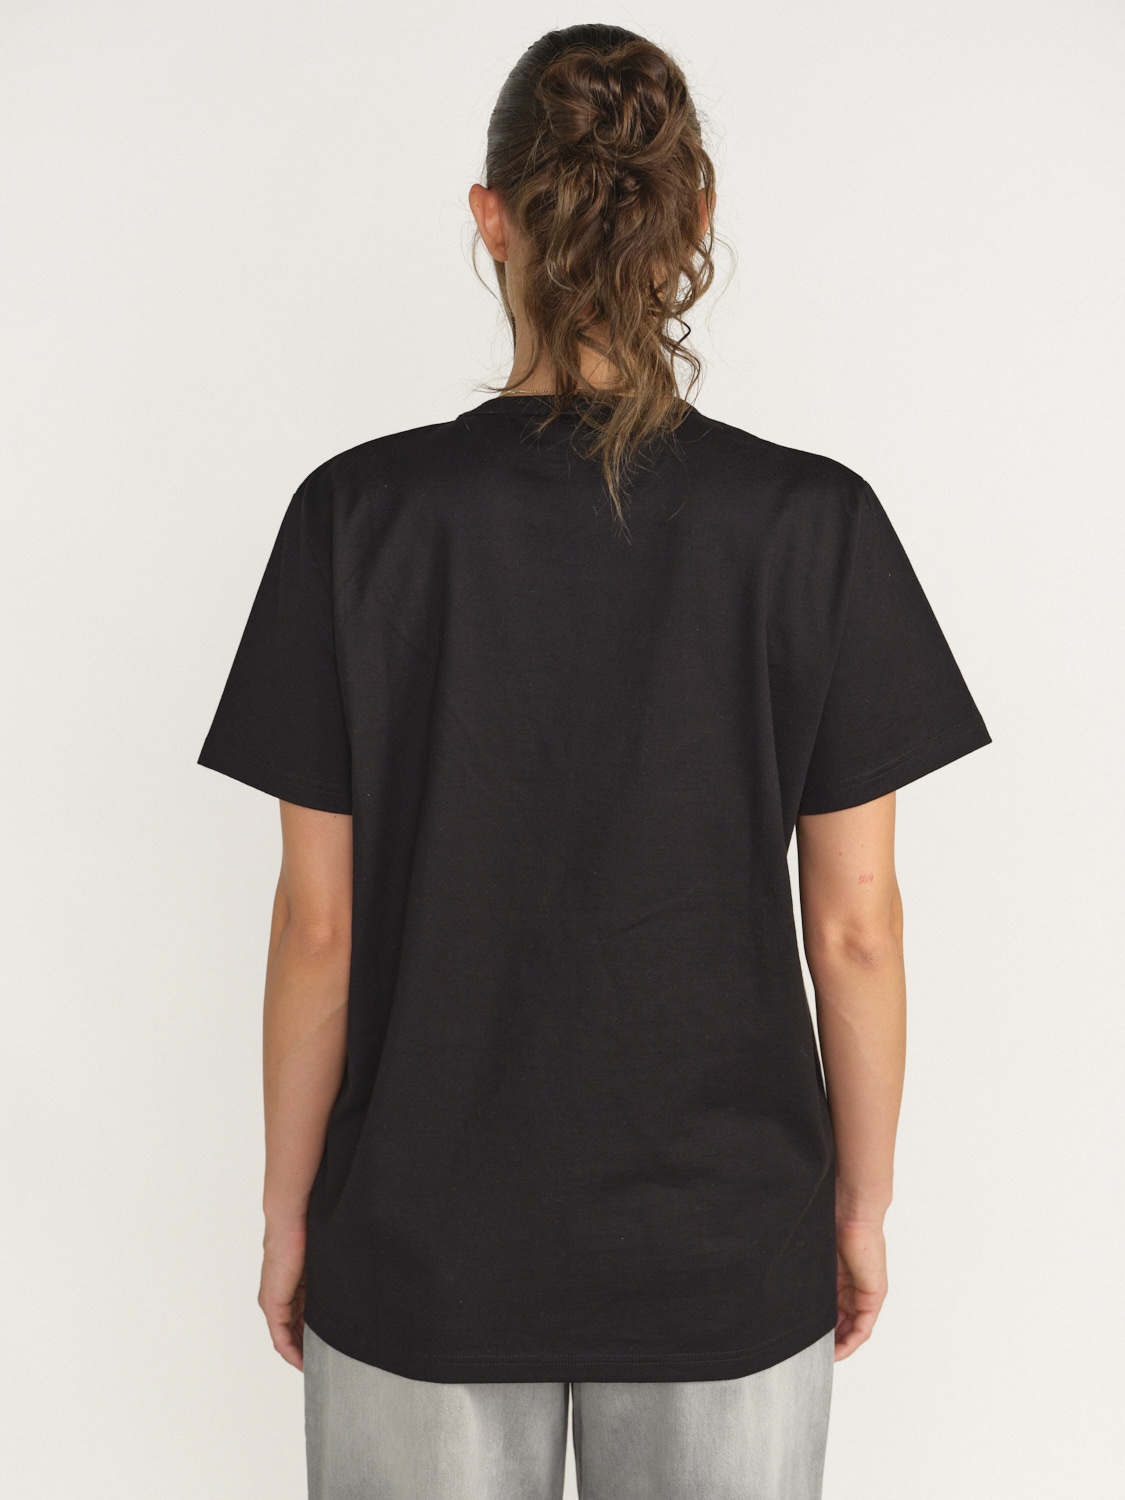 Barrie Barrie - Cardo - Barrie - Cardo - T-shirt con applicazioni in cashmere marrone XS